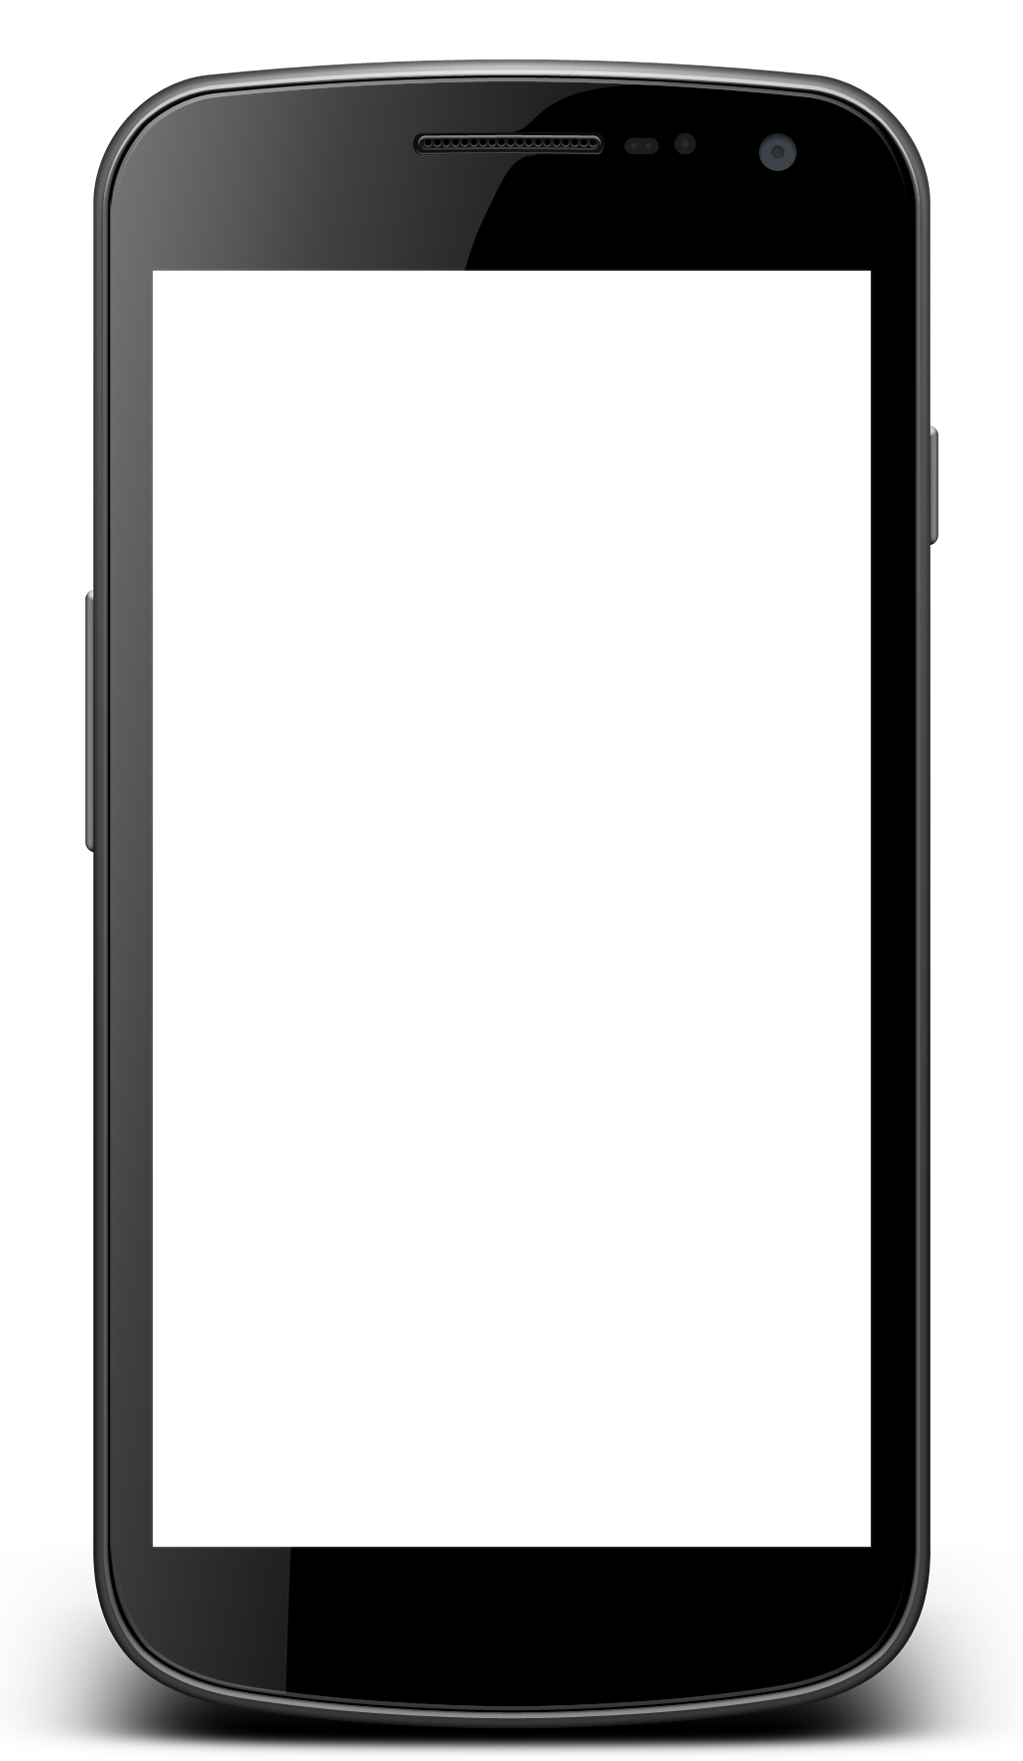 fondo de pantalla transparente para móviles,artilugio,caja del teléfono móvil,teléfono inteligente,teléfono móvil,accesorios para teléfono móvil